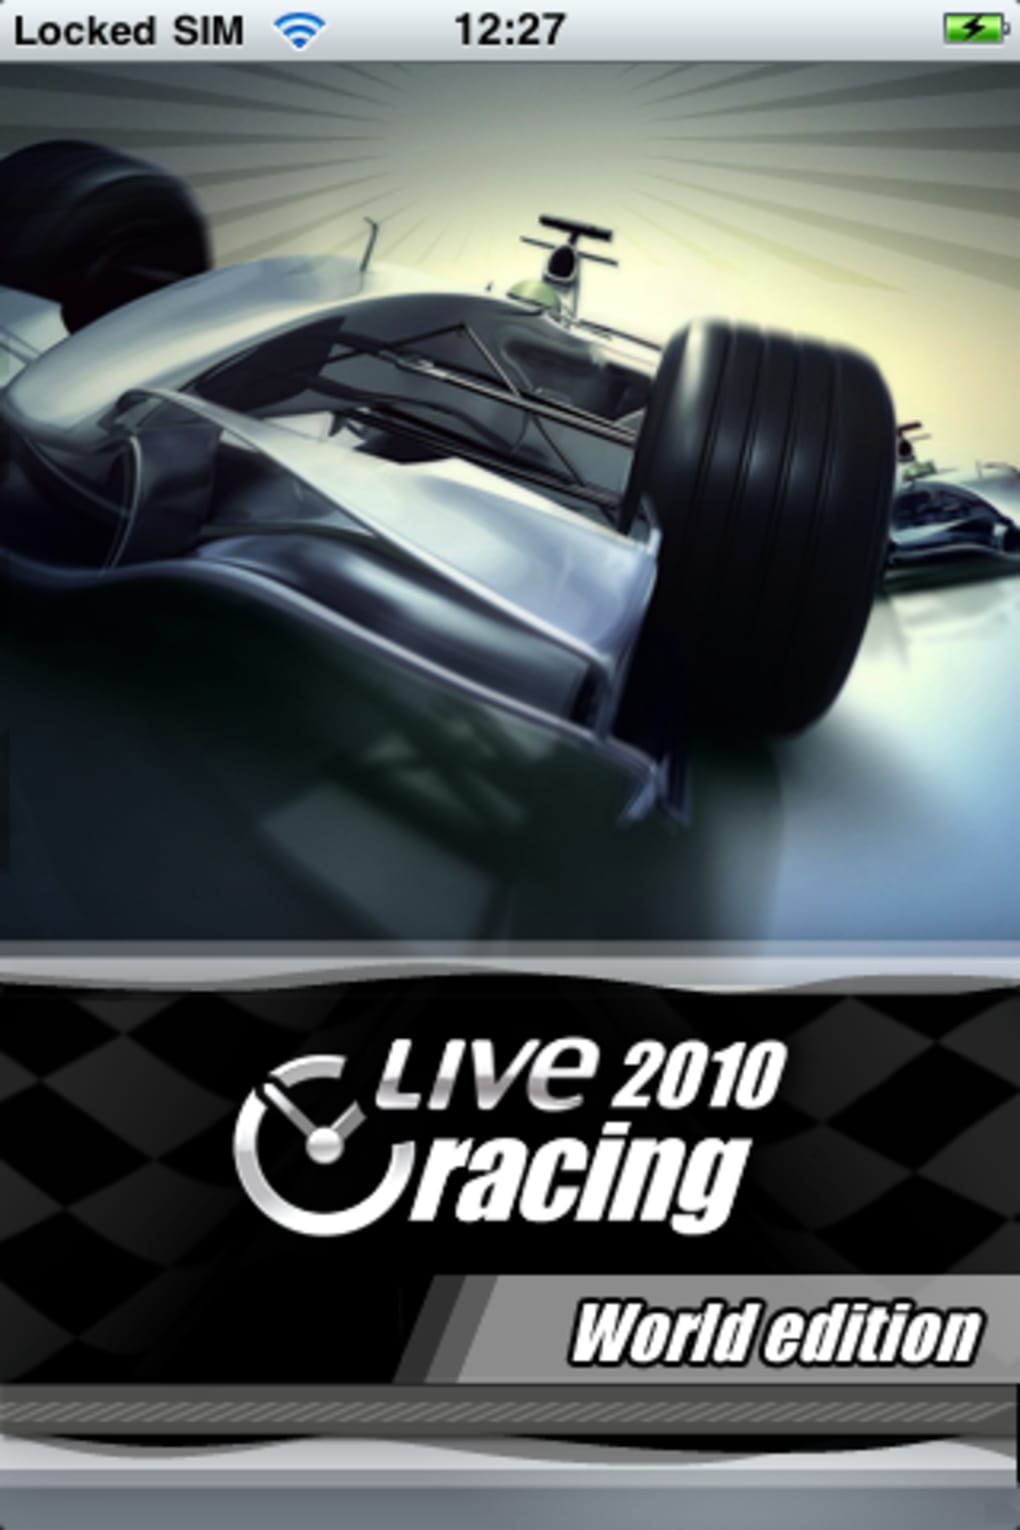 download free 2010 formula 1 season